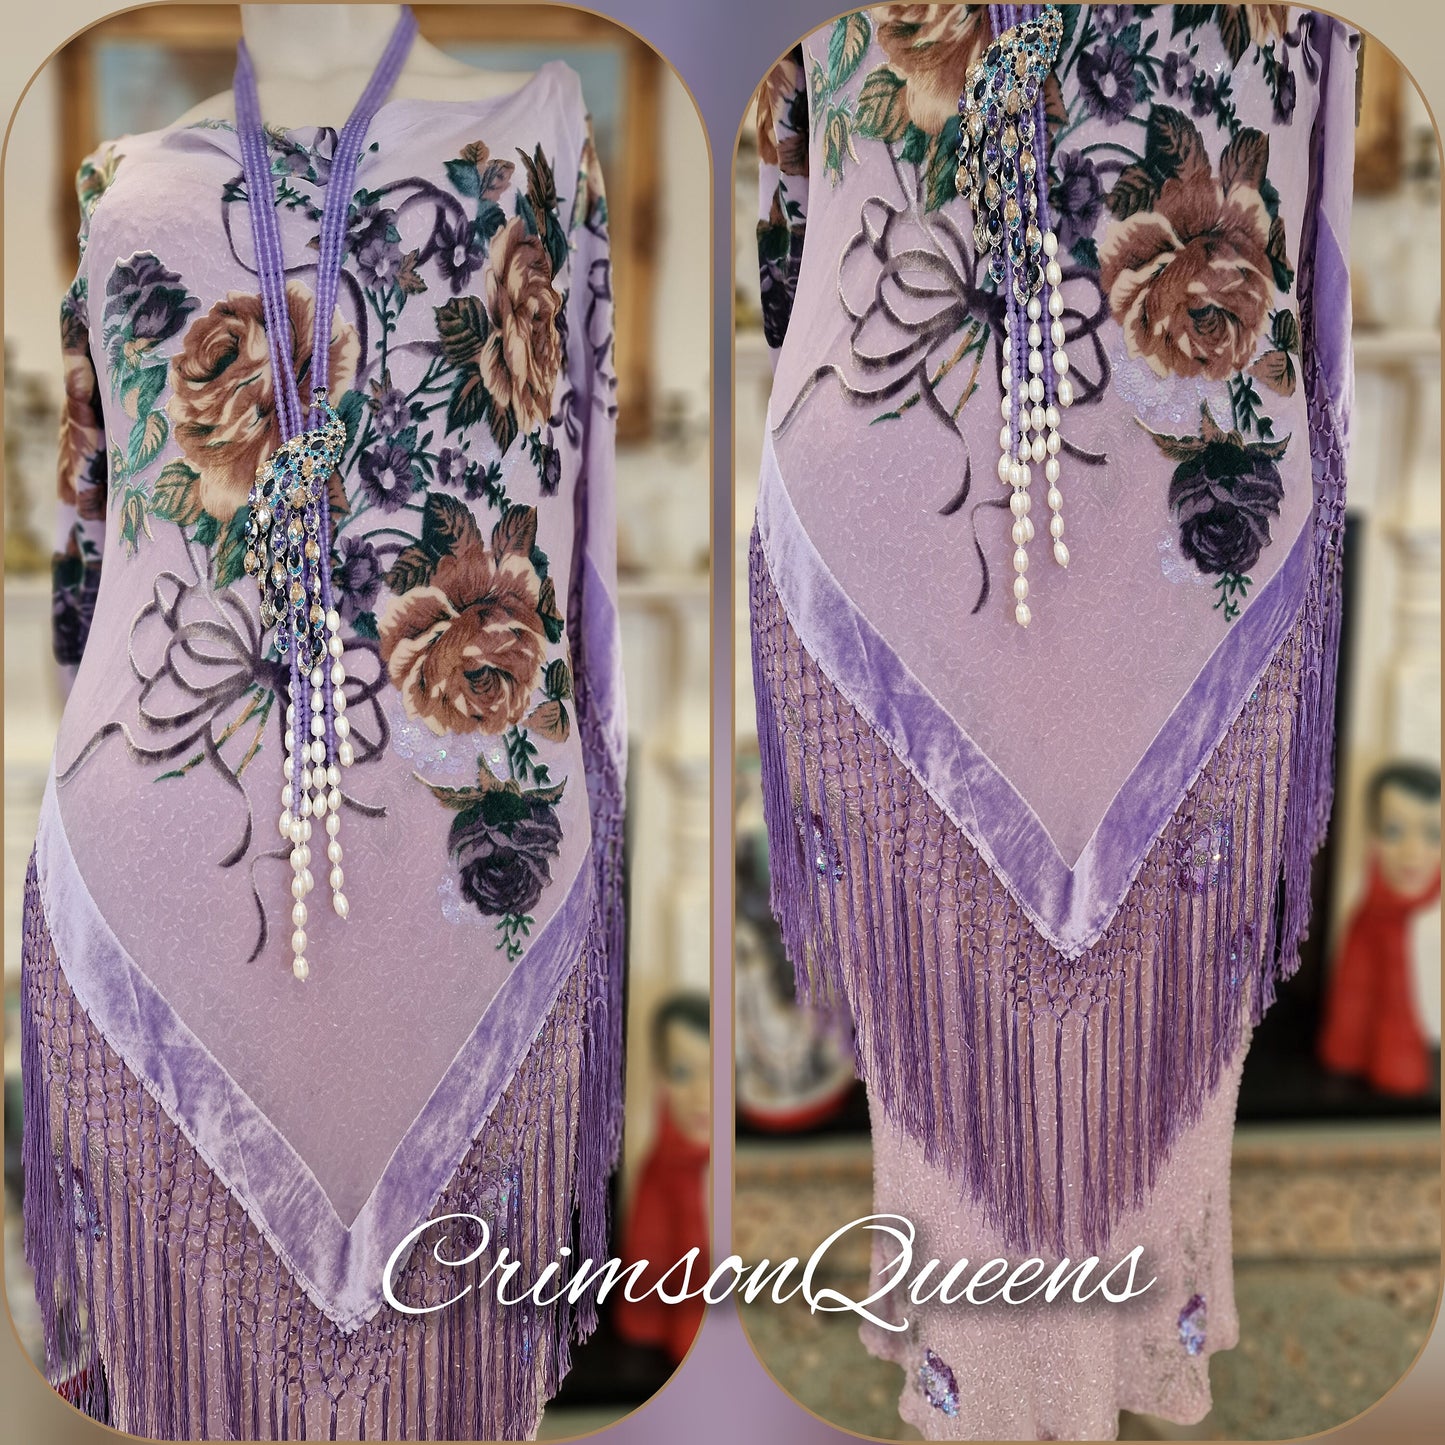 1920s dress Great Gatsby dress flapper gold purple pink dress tassel fringe beaded sequined dress Downton Abbey dress size UK 10 US 6